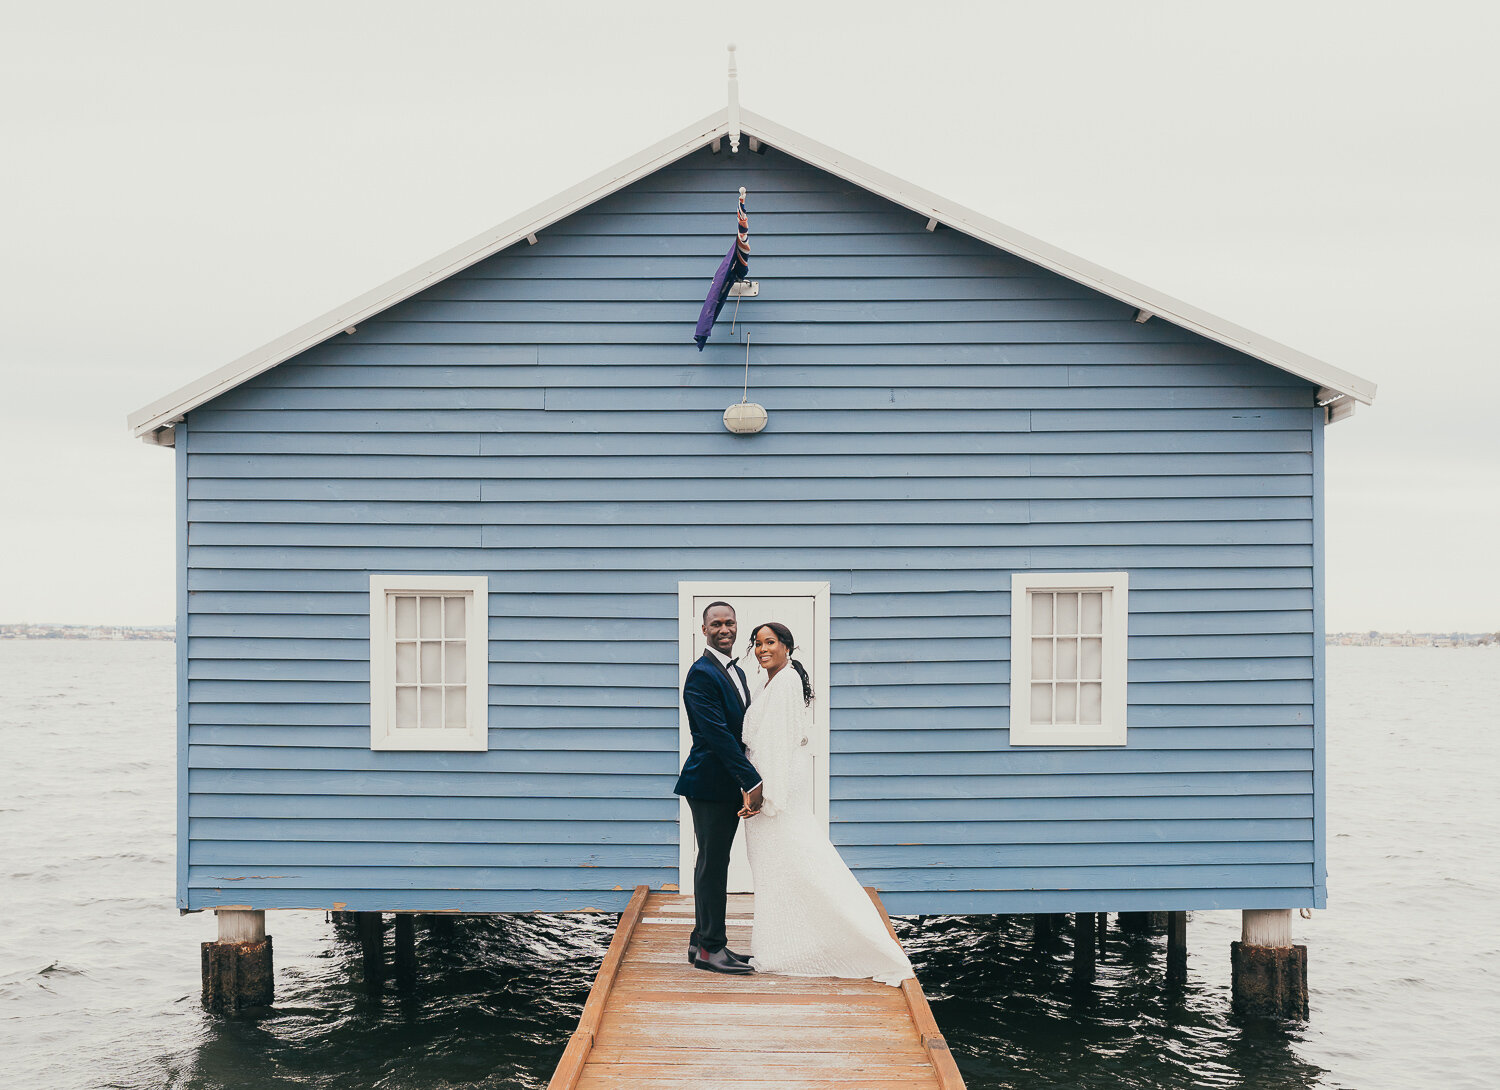 Rift Photography Perth Wedding Photographer Hire Australia-4031.jpg